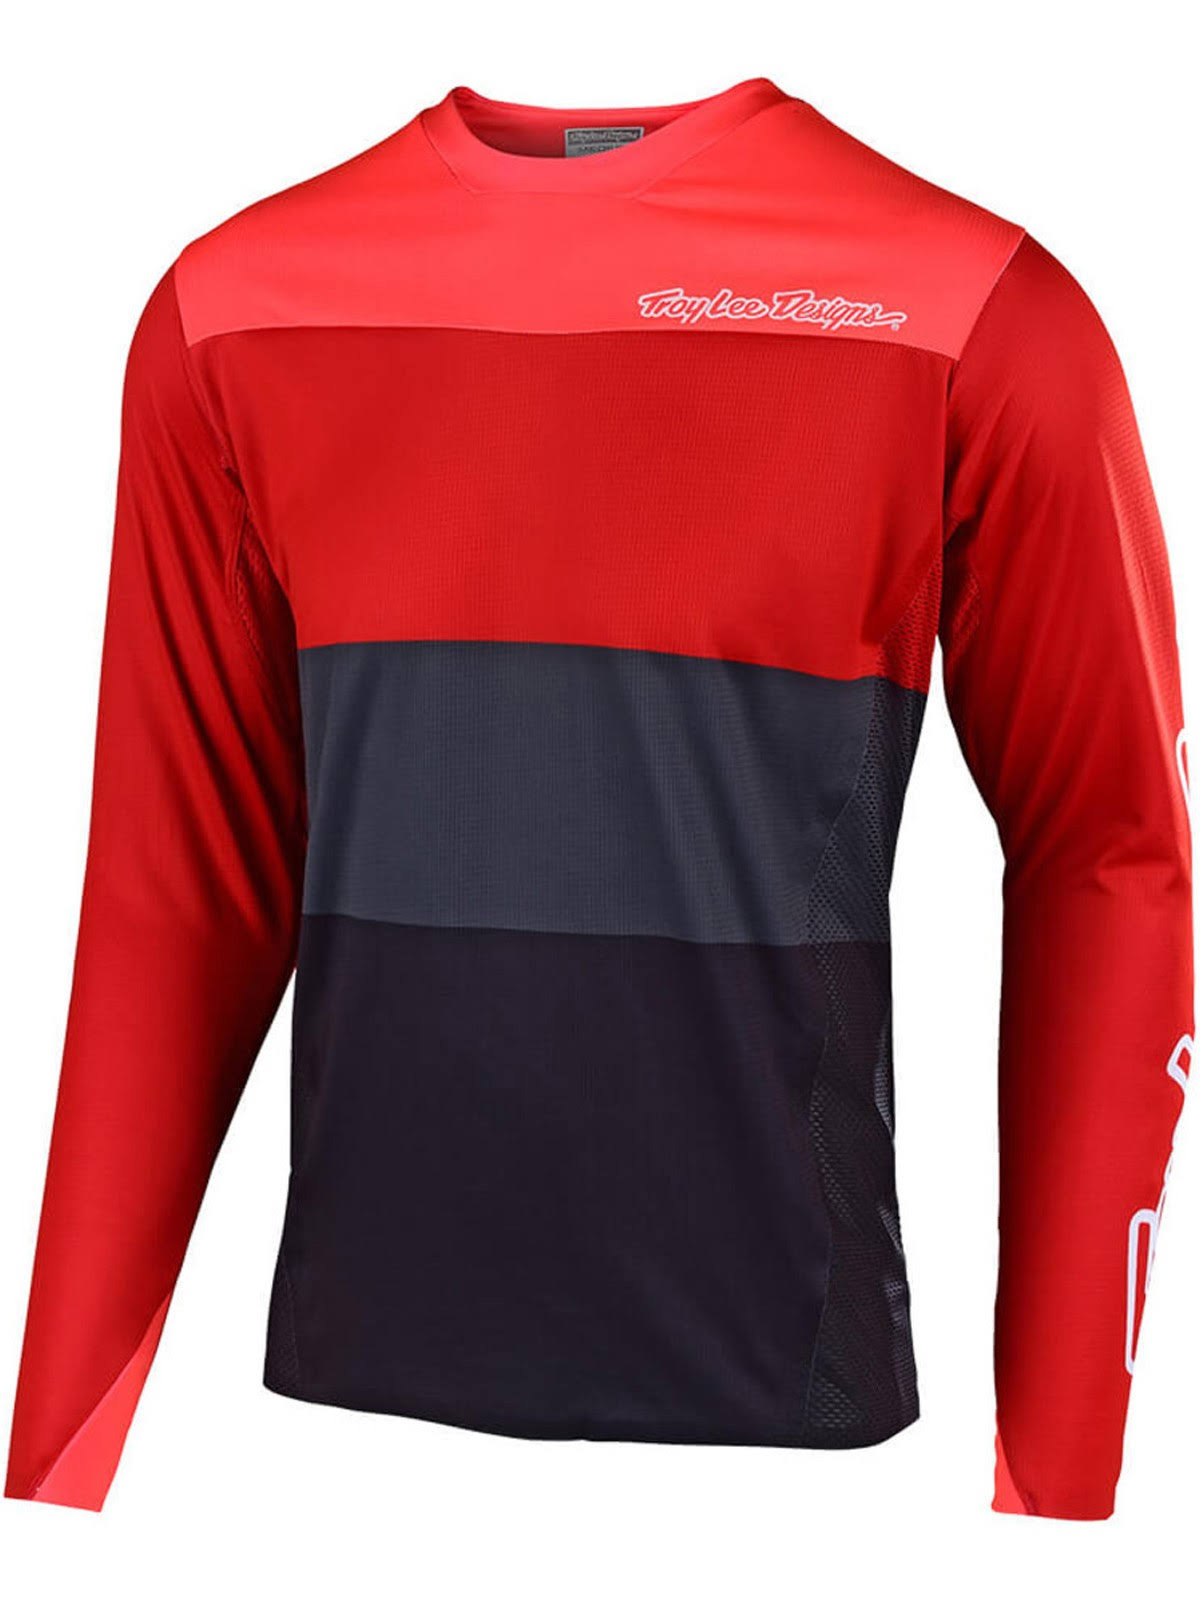 Troy Lee Designs 2019 Red Sprint Elite Long Sleeved MTB Jersey